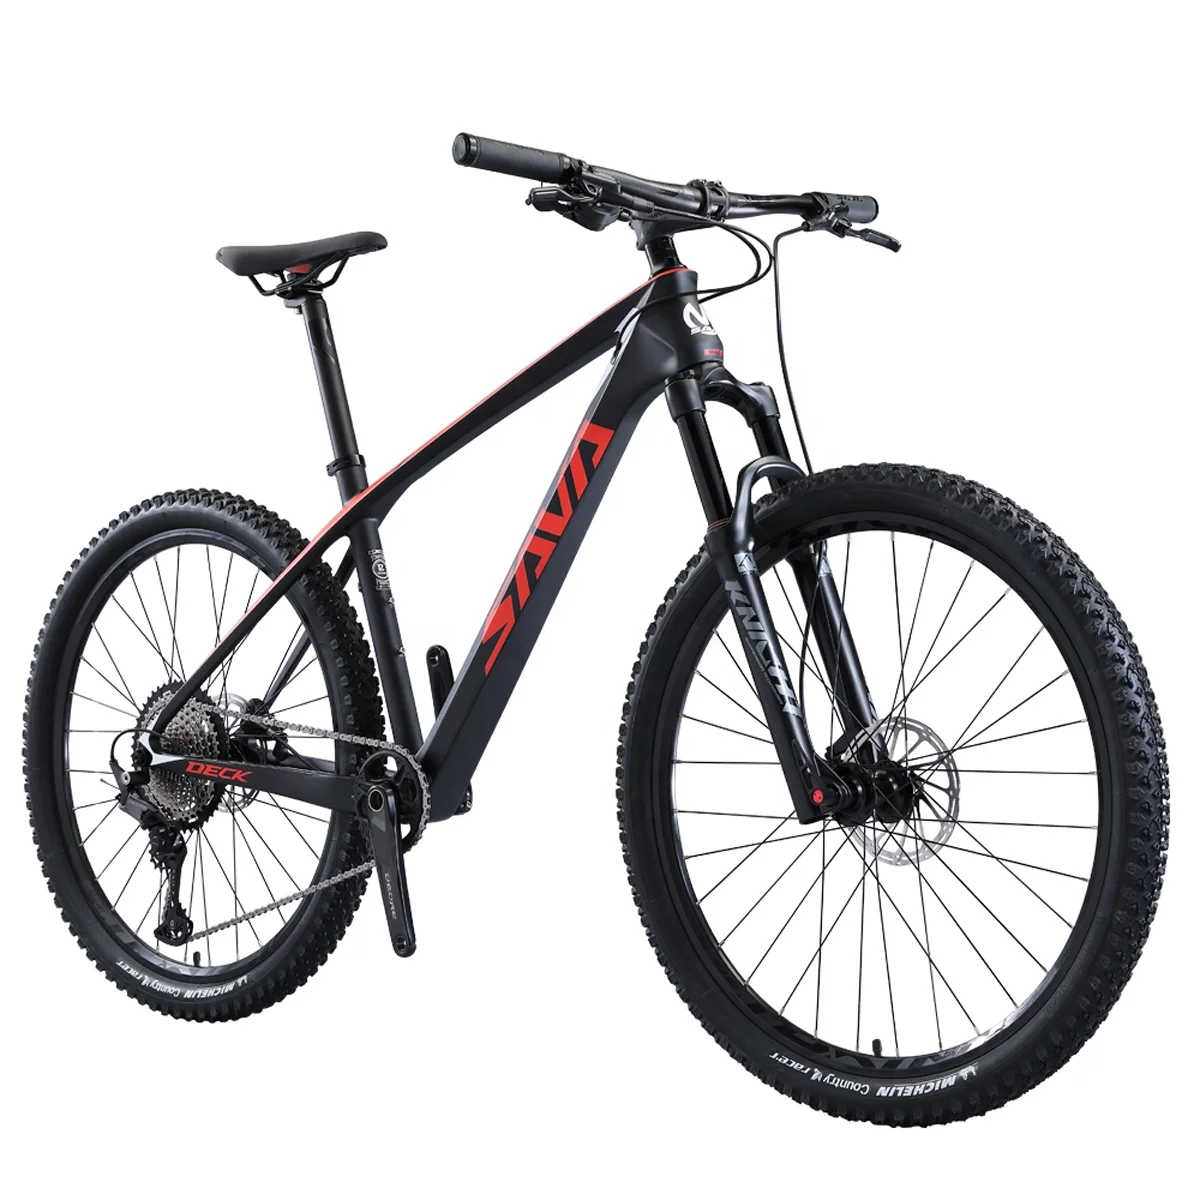 

Hot Sale SAVA Deck 6.1 Carbon Fibre MTB Bicycle 12 Speed Mountain Bike Disc Brake MT275 29inch bicicletas, Black red